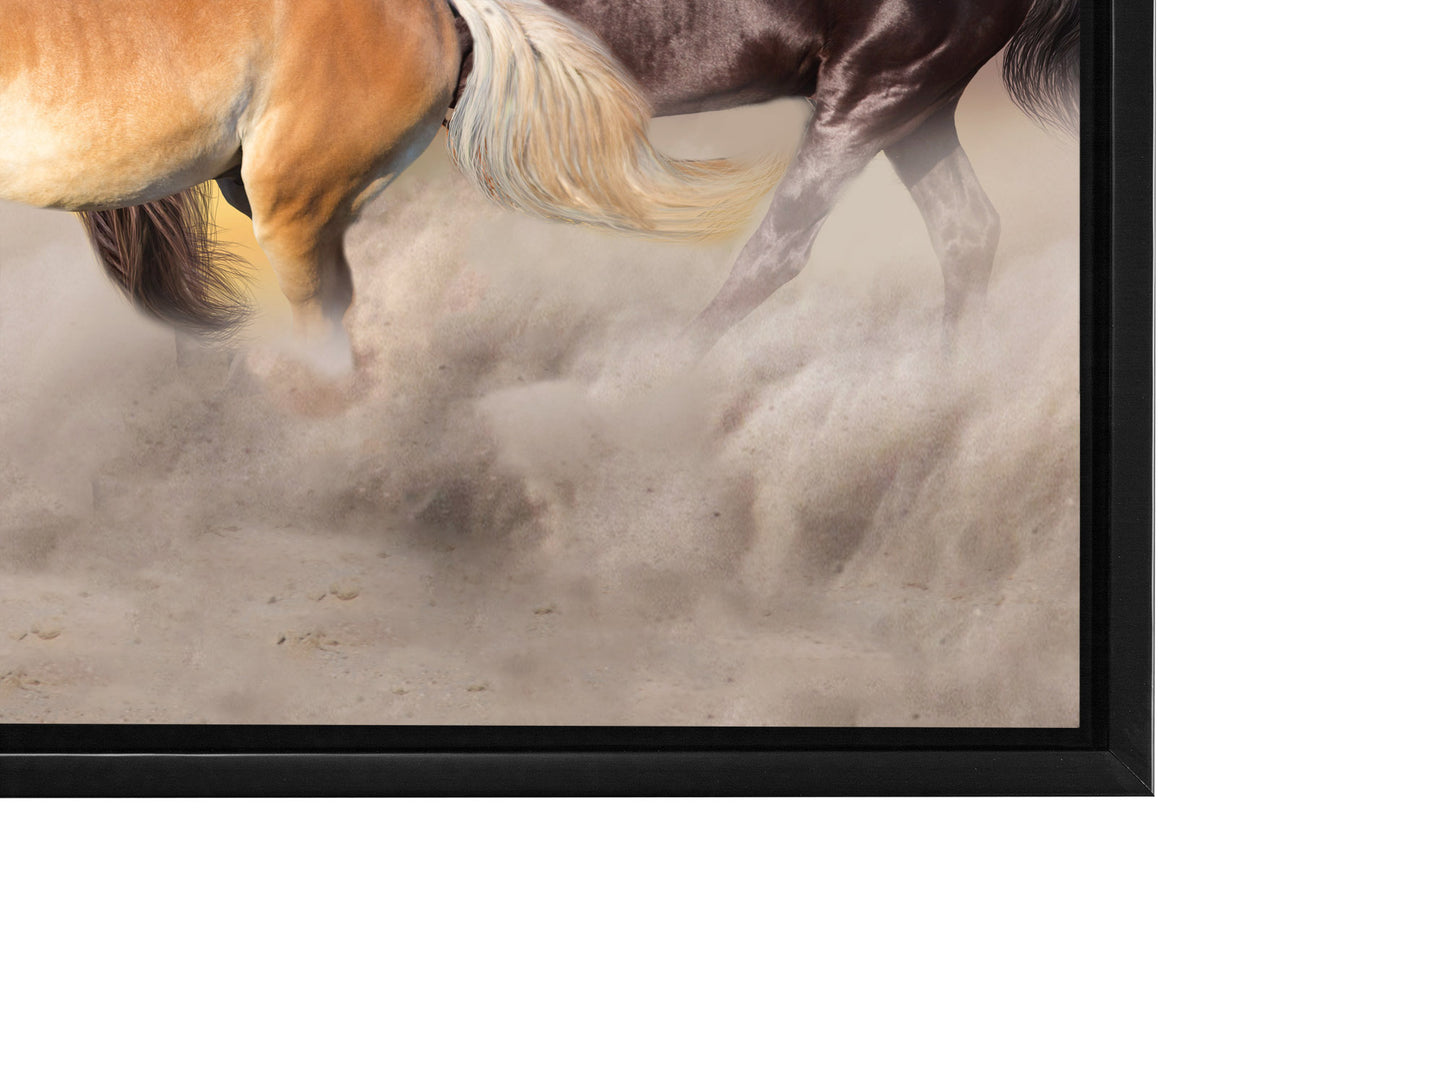 Team of Five Horses- Wildlife Canvas Art - Gold varnish